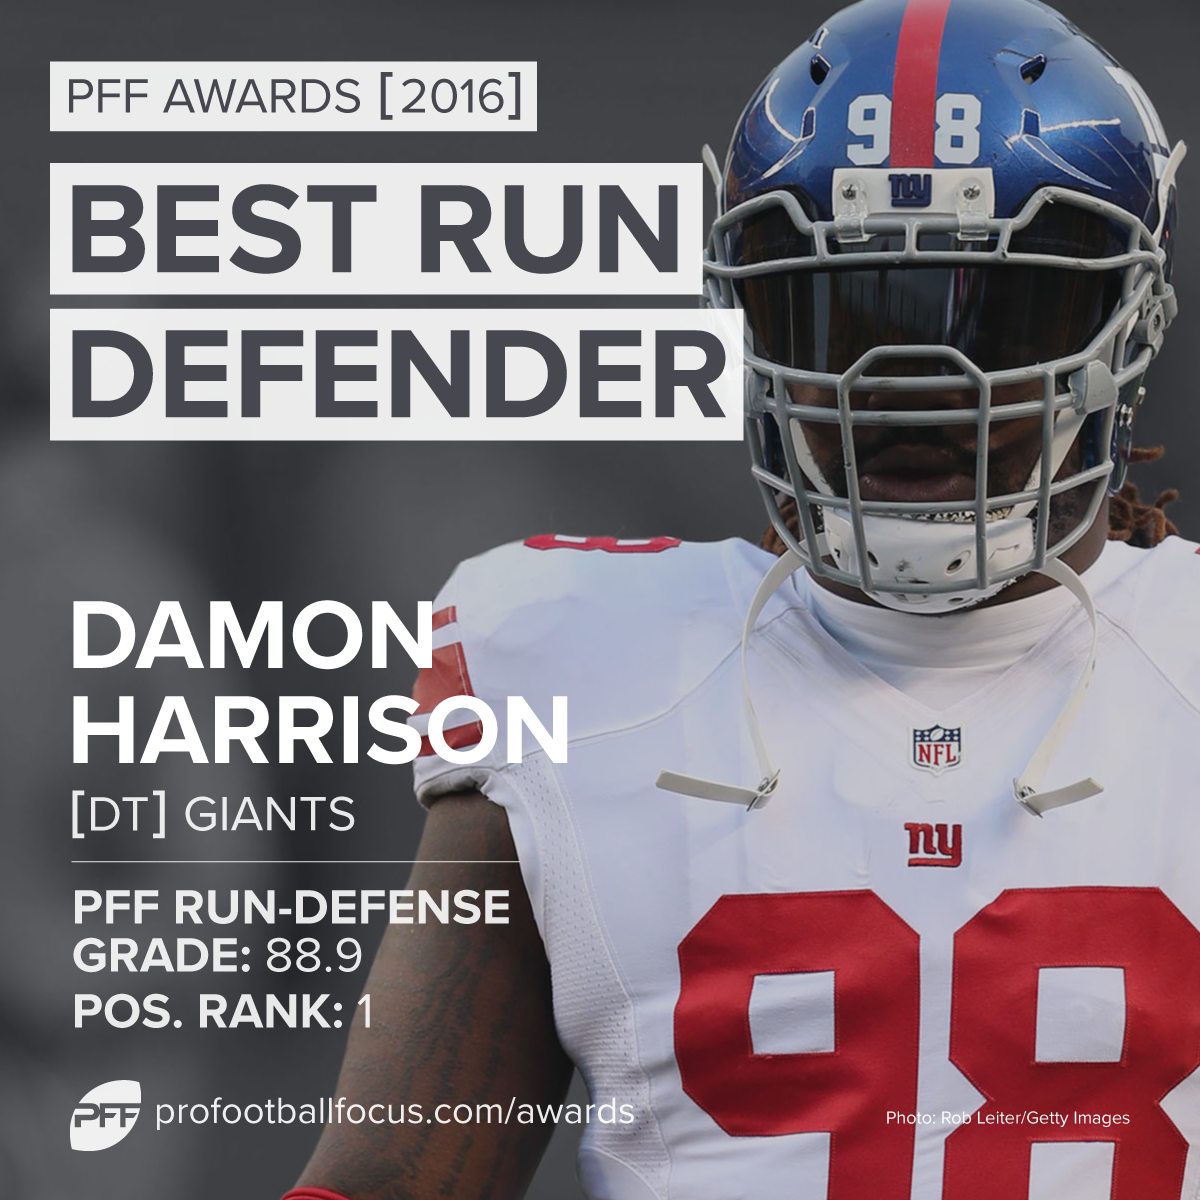 harrison_best-run-defender1.png